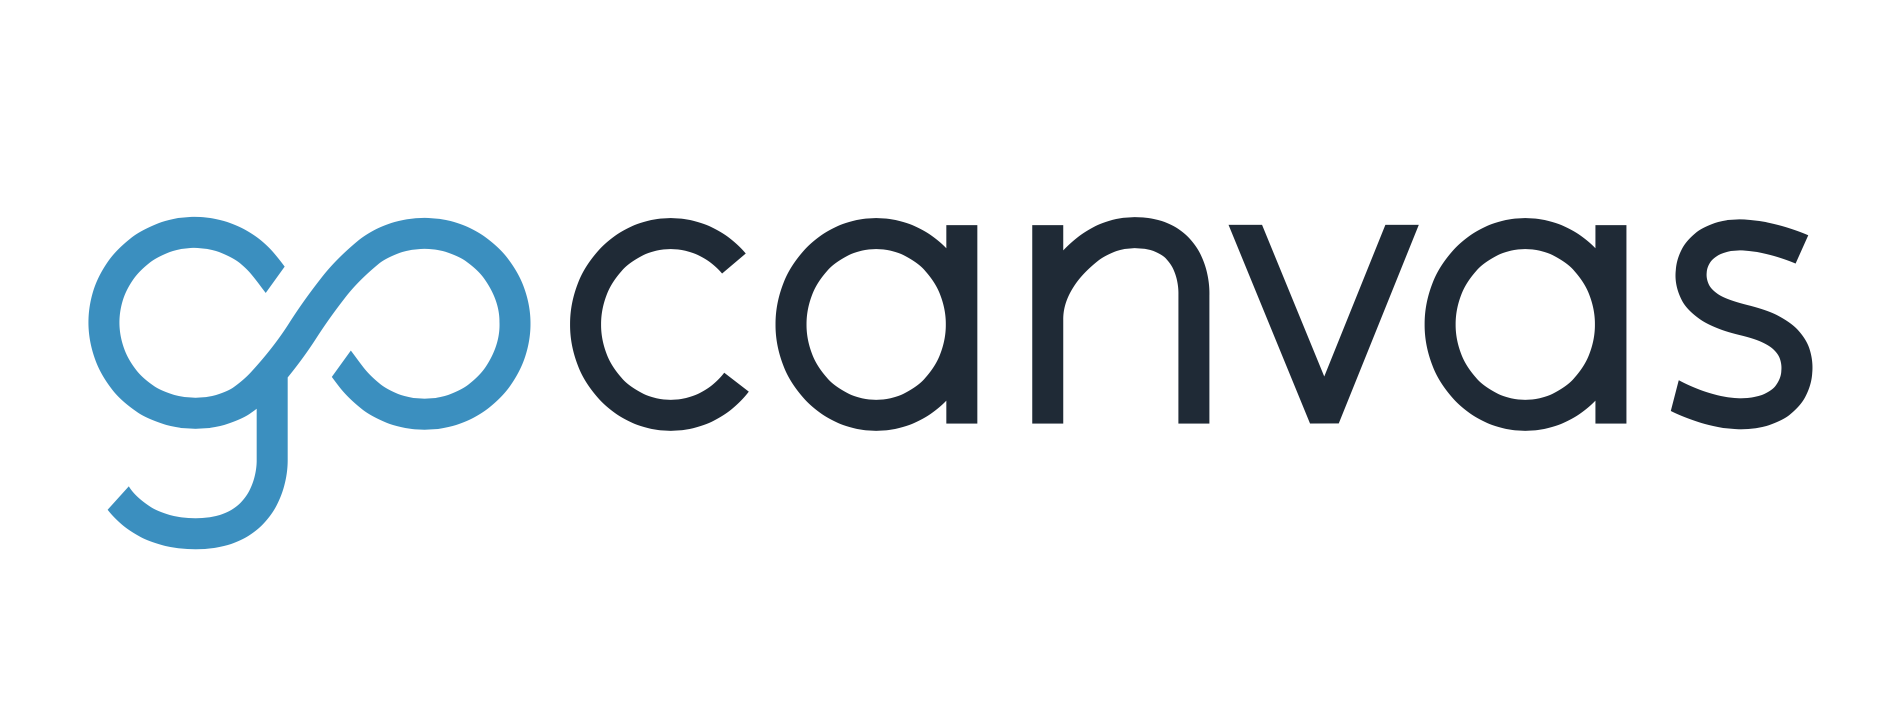 GoCanvas Logo